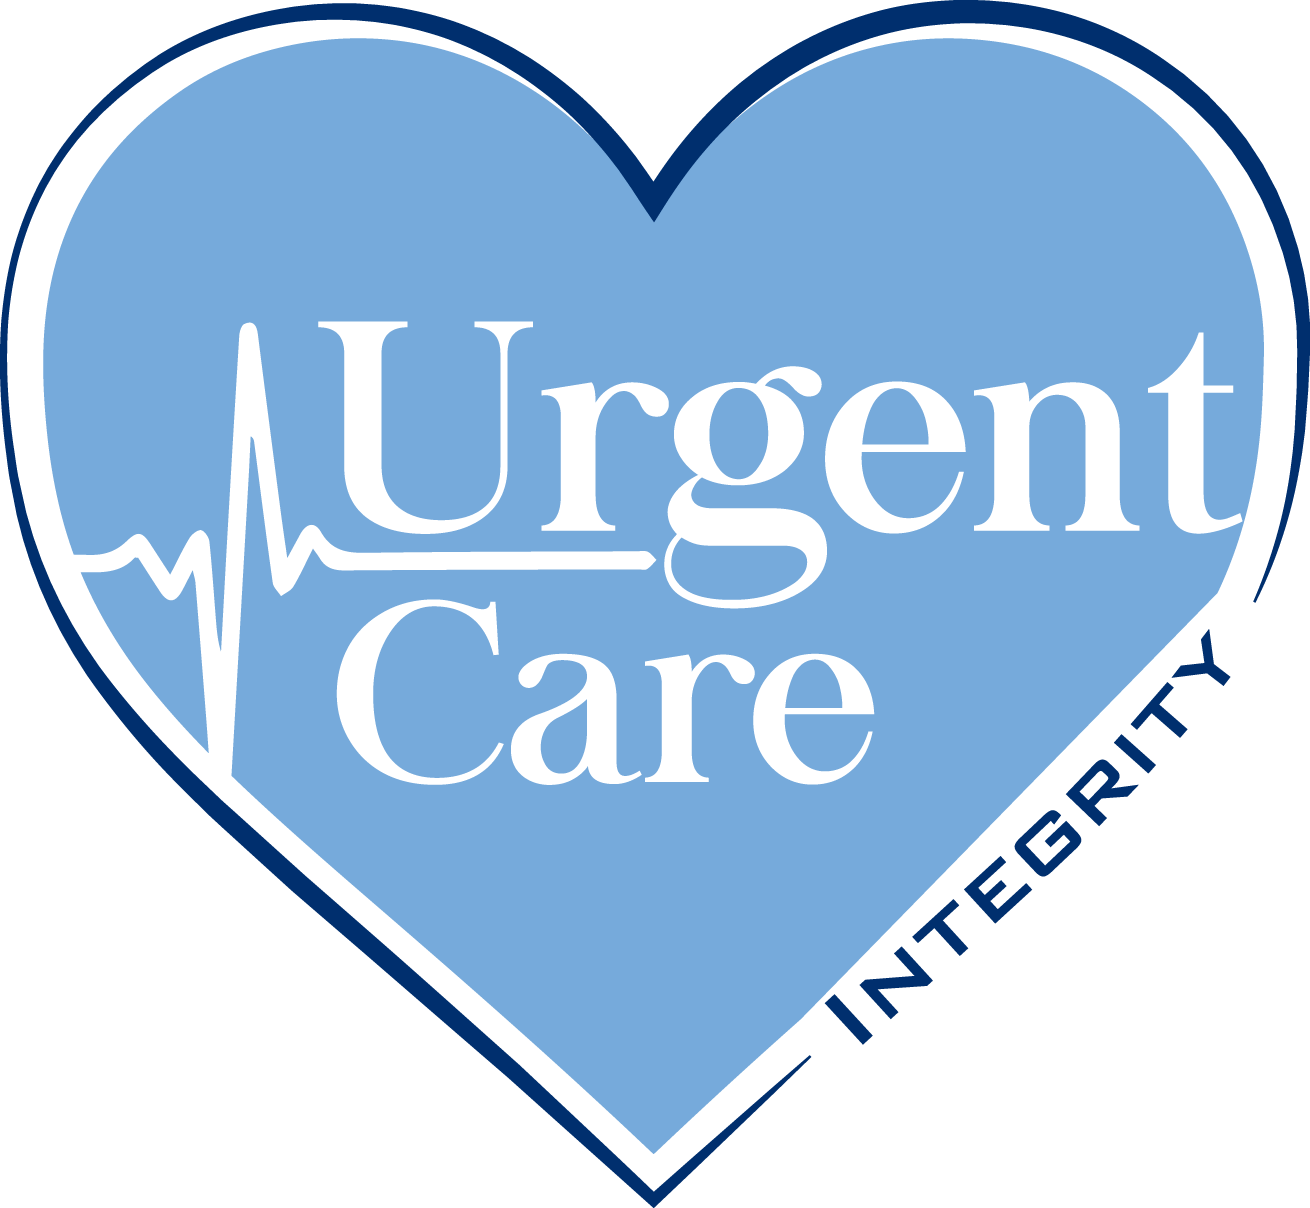 Integrity Urgent Care - Cleburne Logo